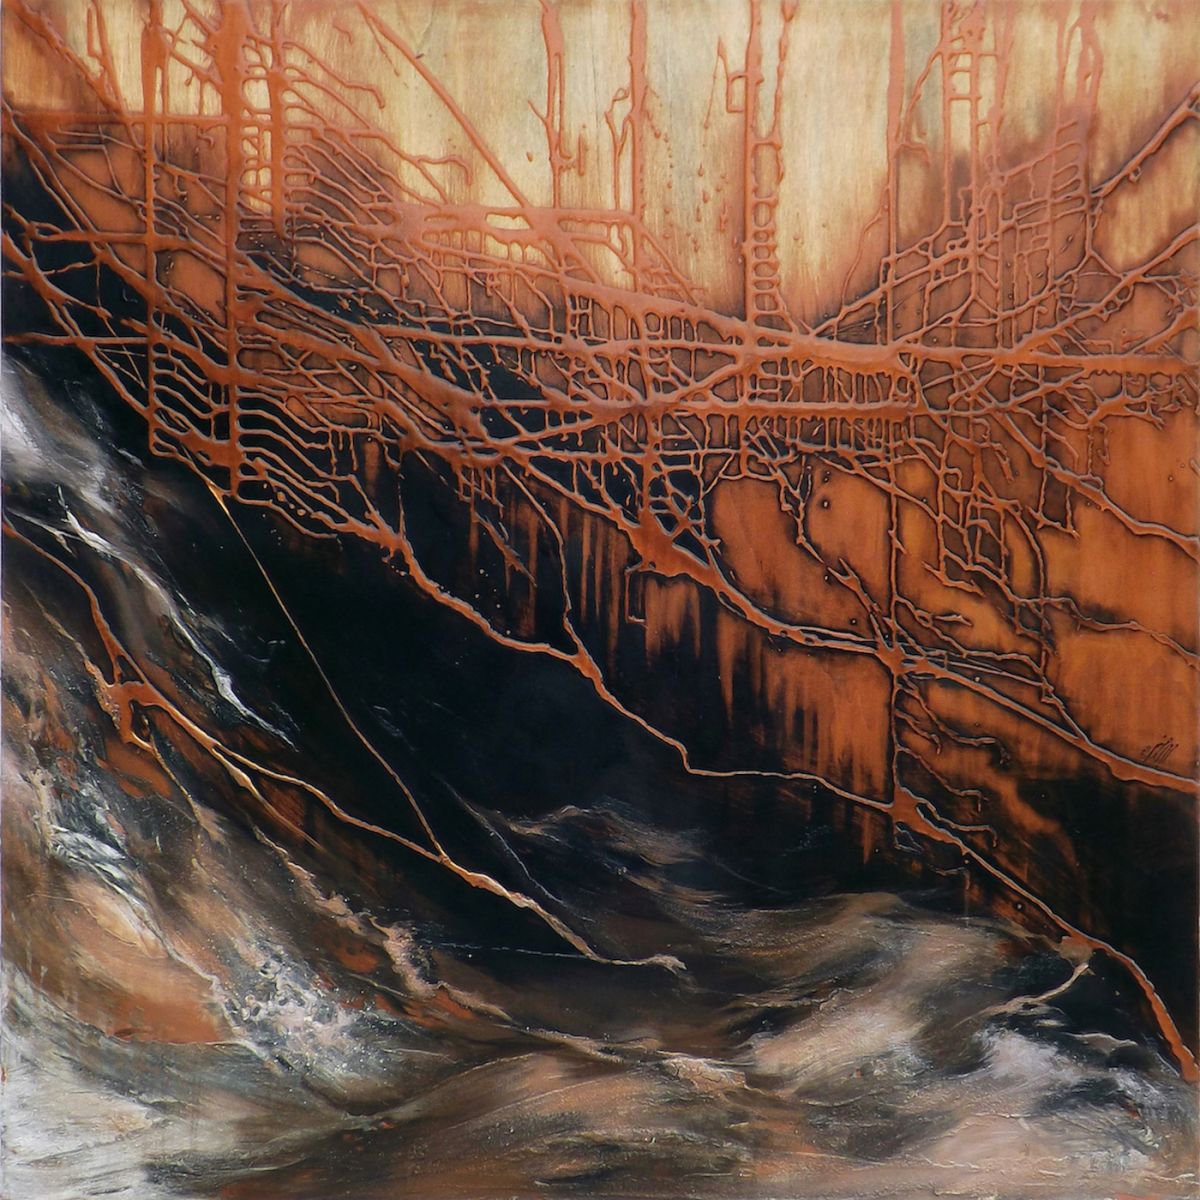 Bronze River - Nowhere VII by Marjan Fahimi